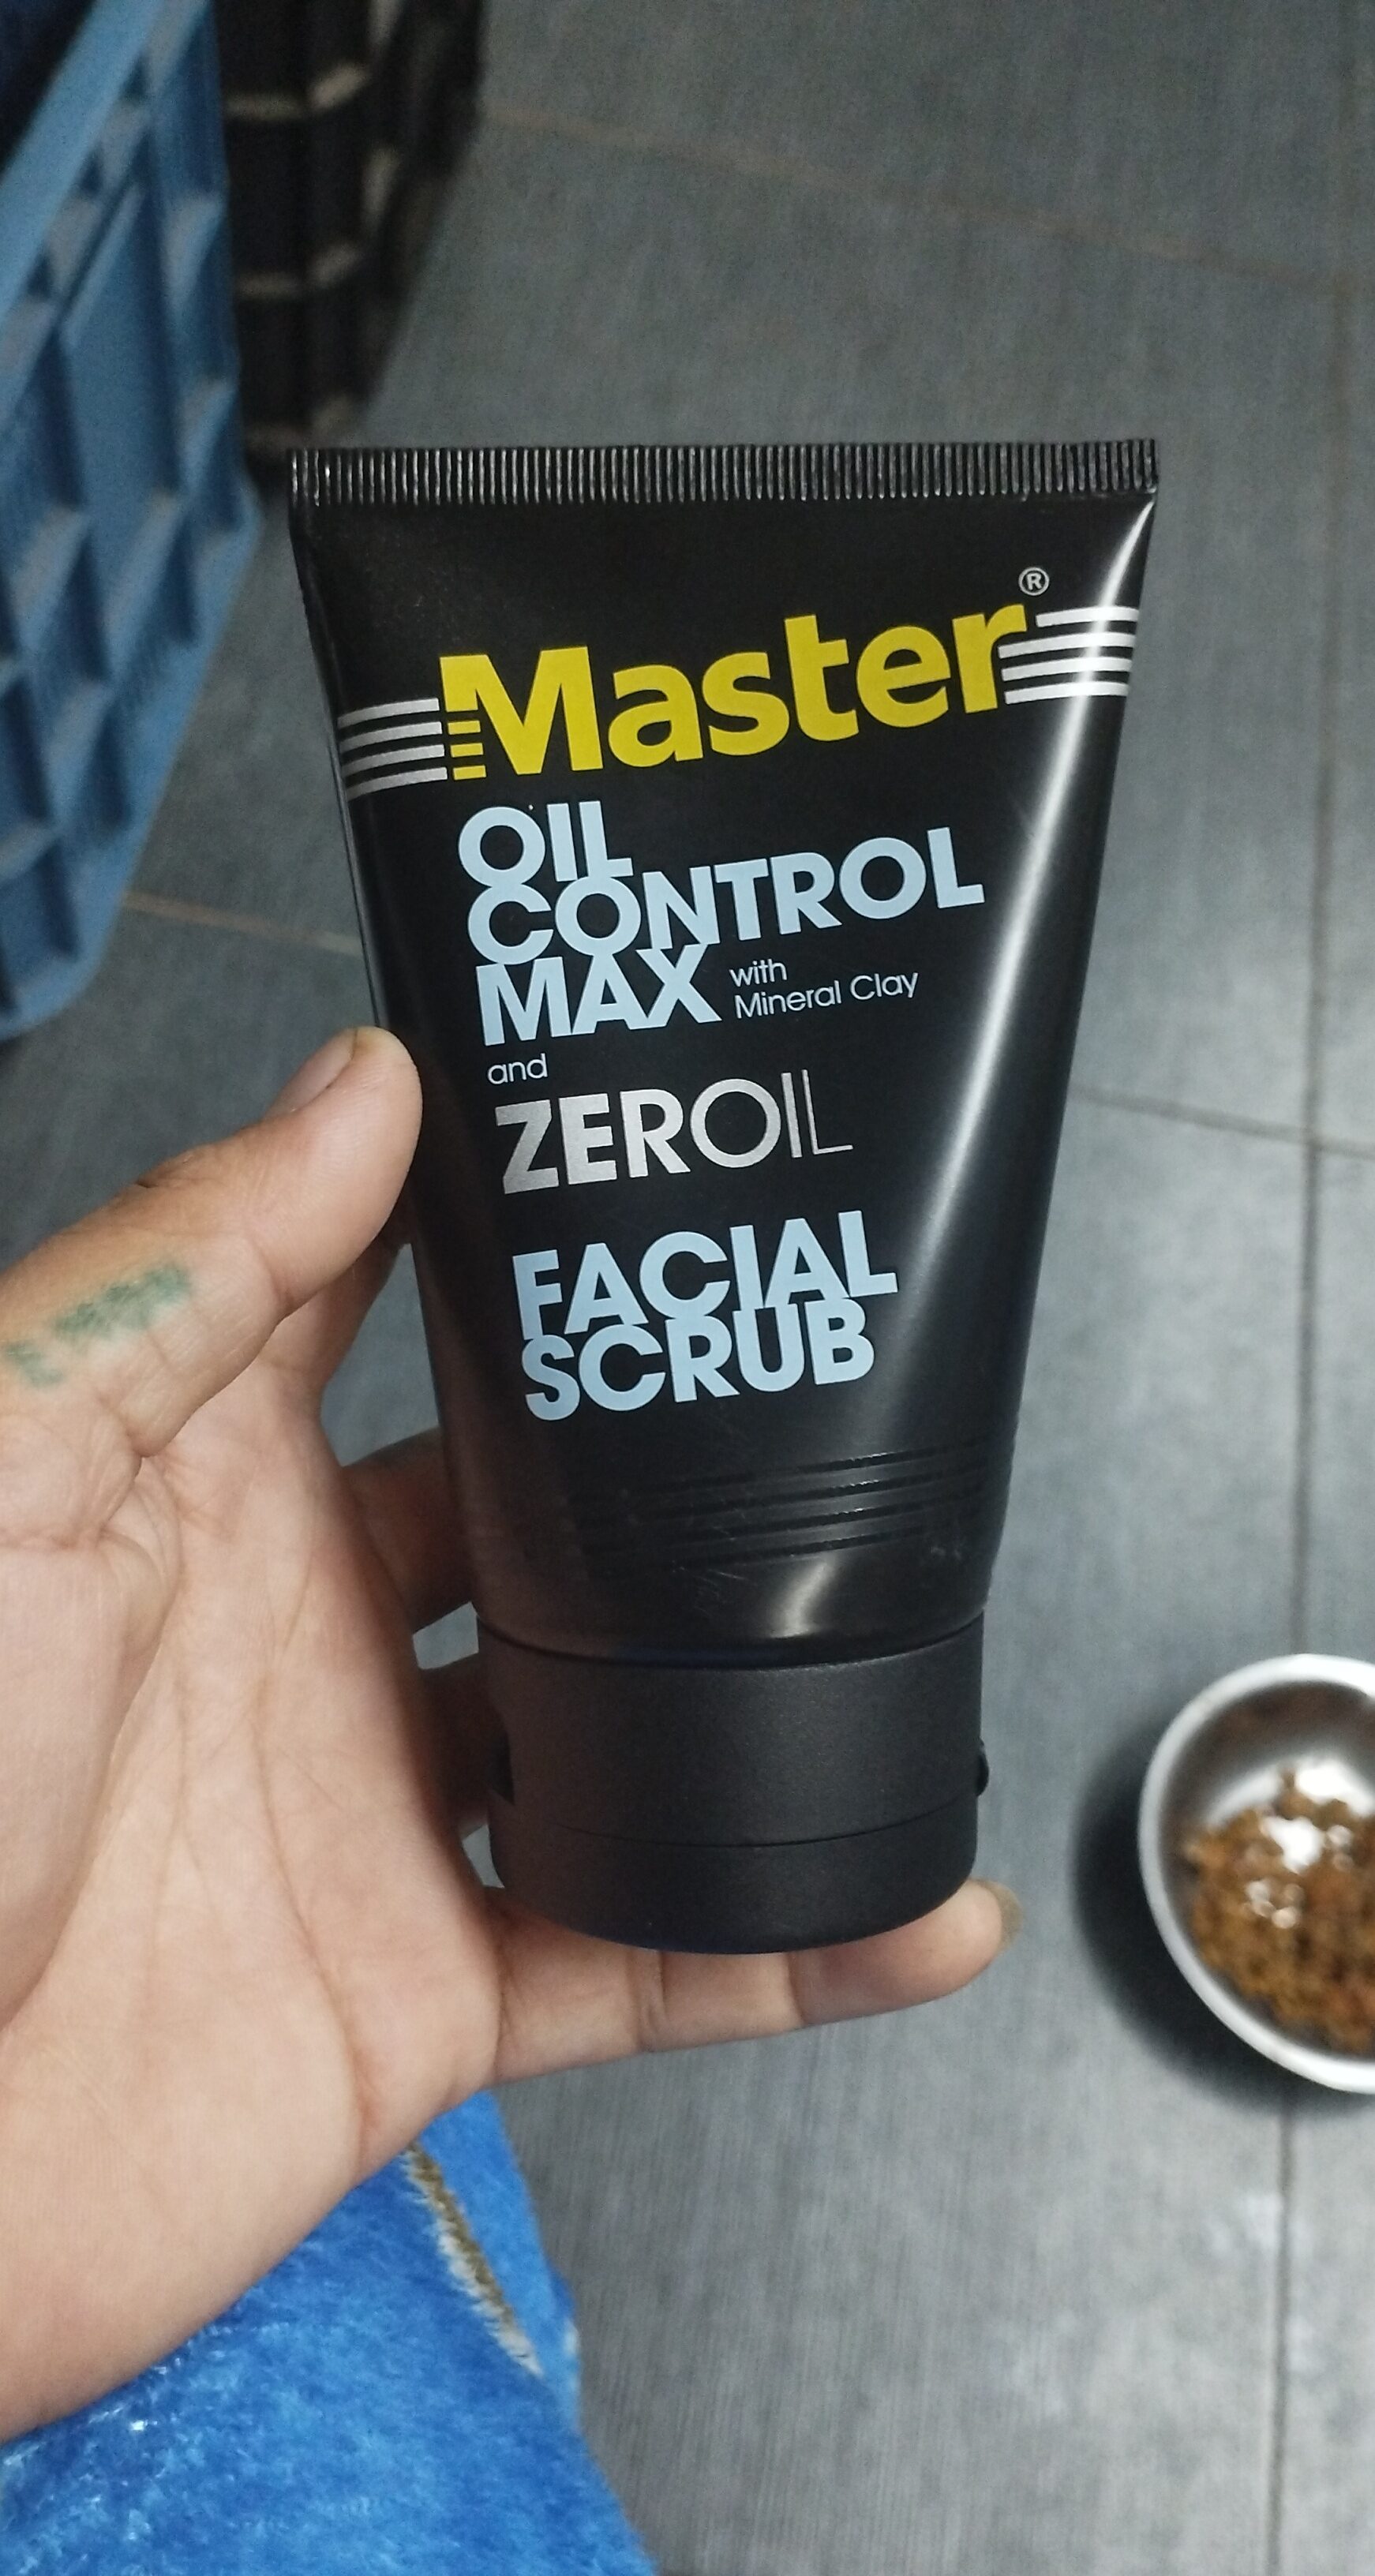 Master oil control max - Produit - en